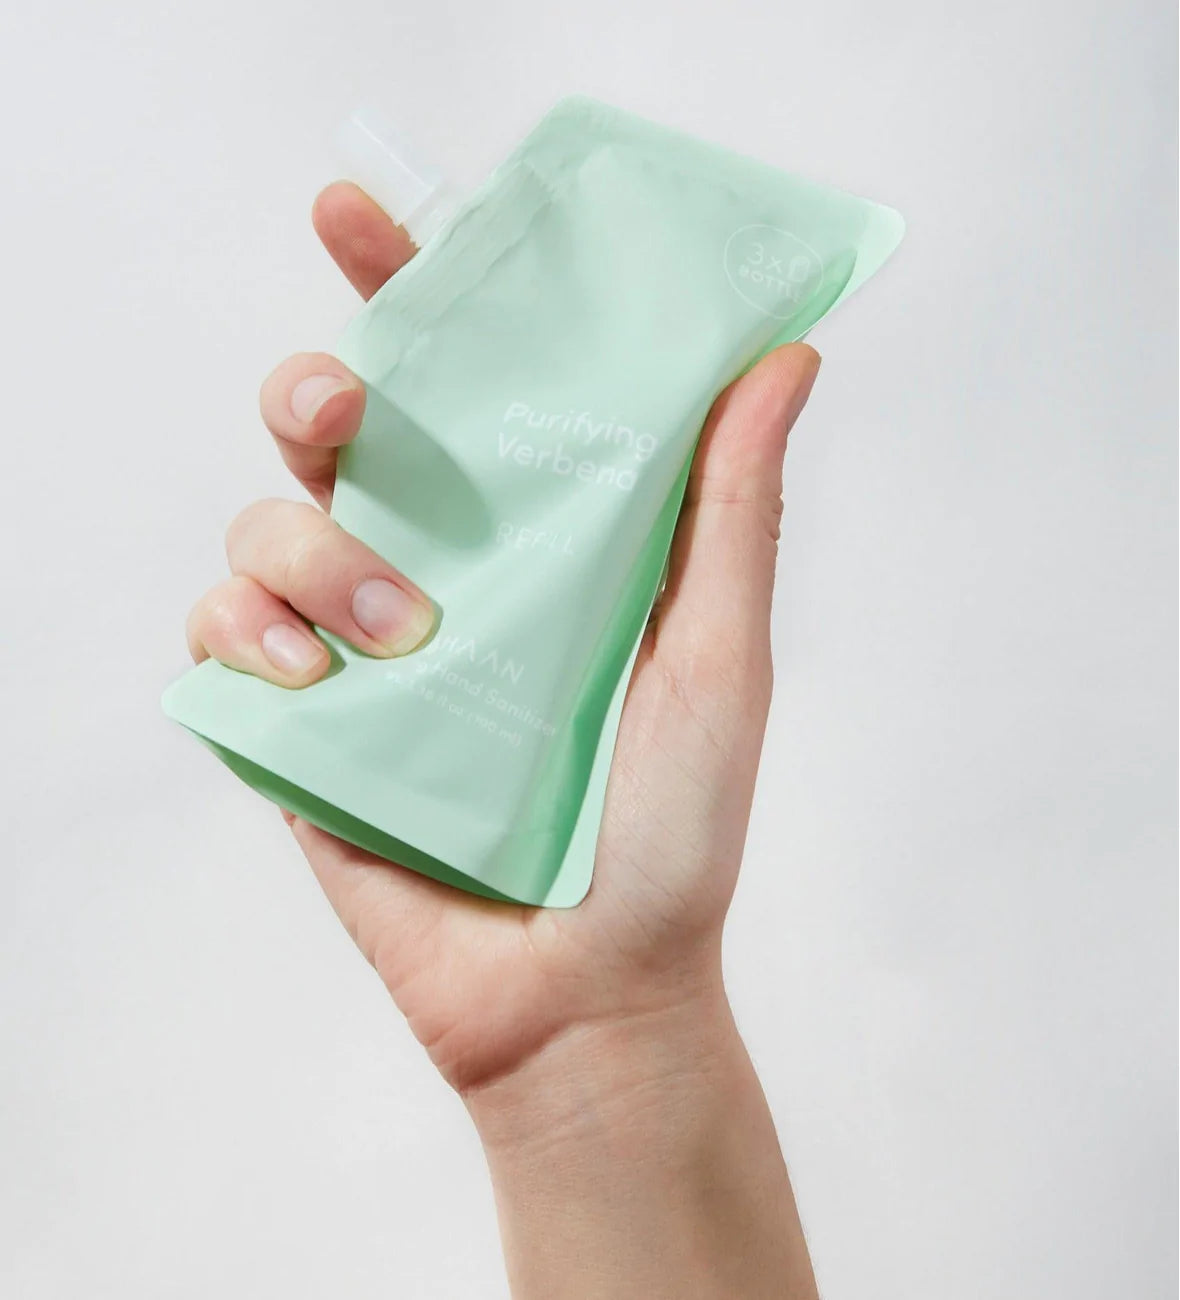 3x Refill Hand Sanitizer Furifying Verbena | HAAN